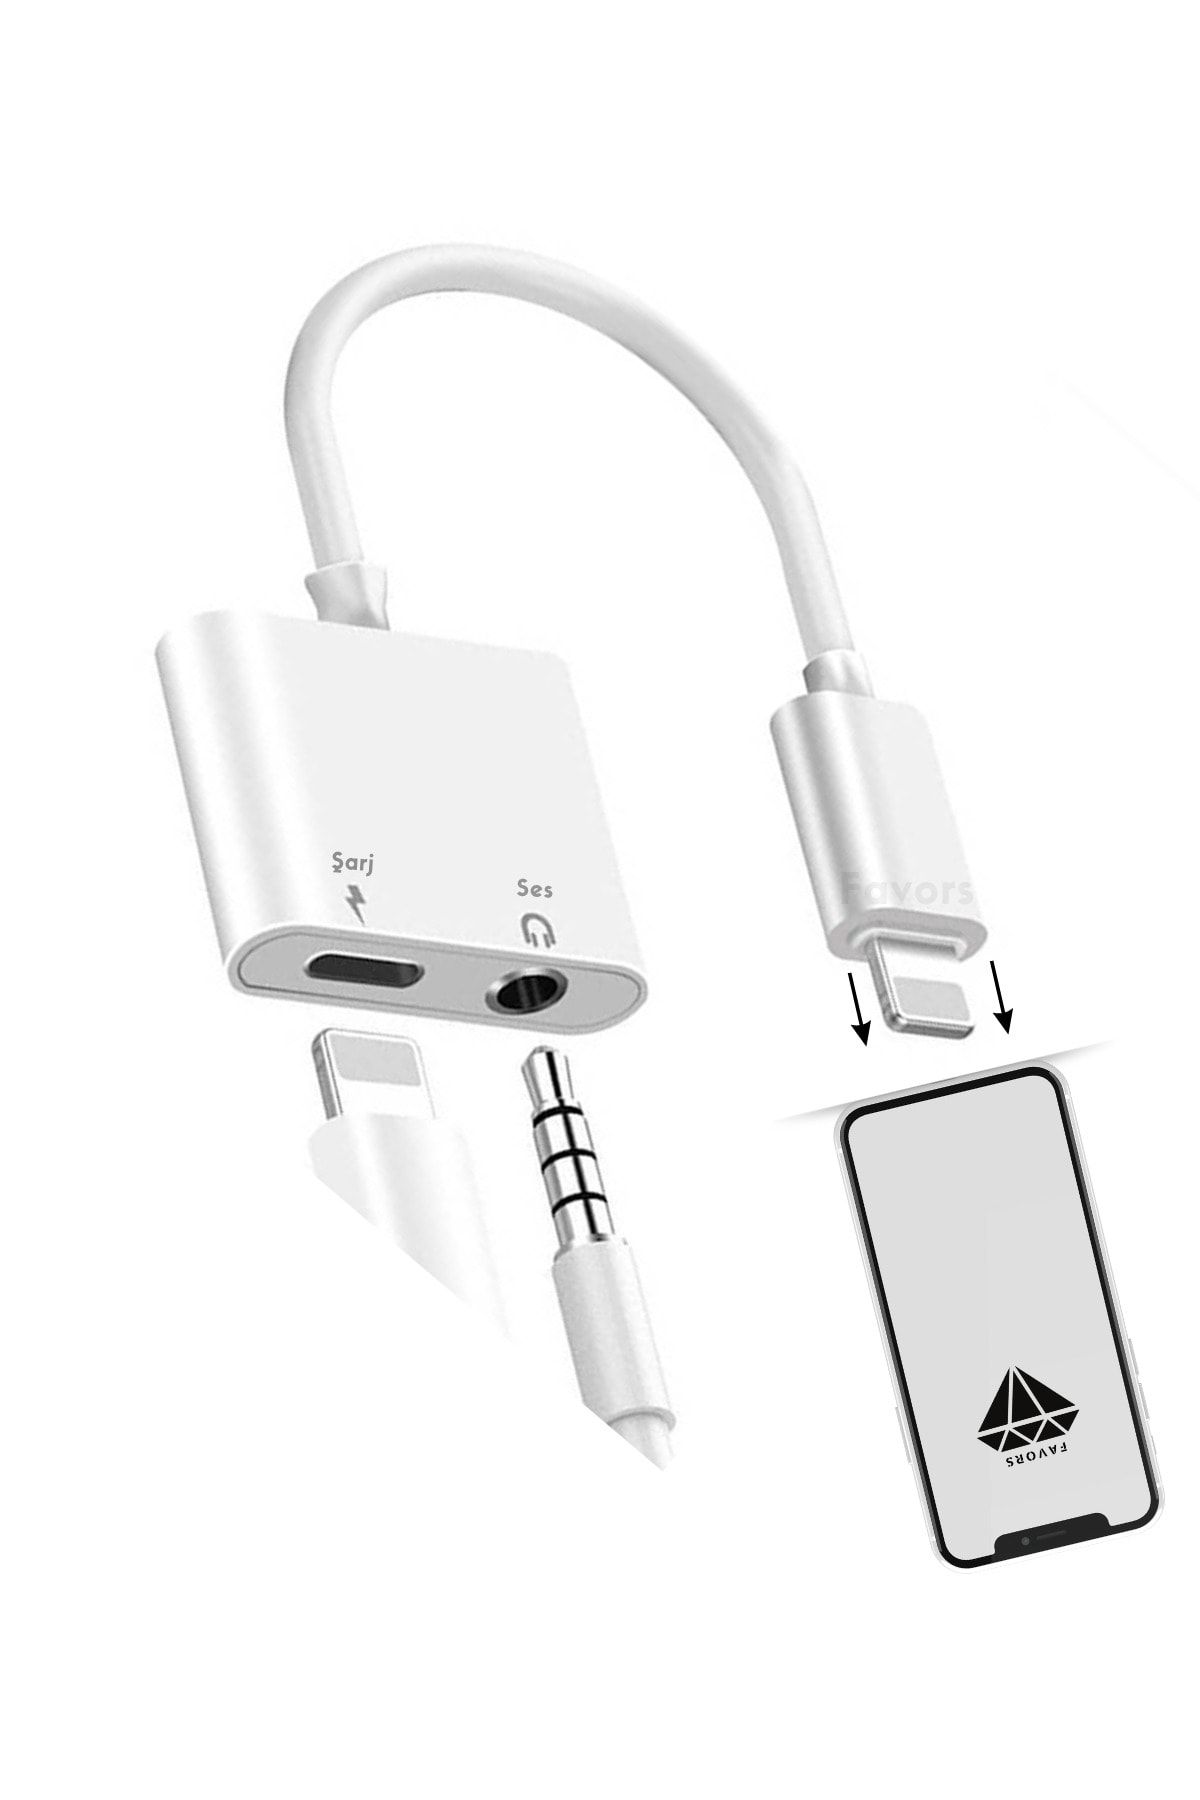 Favors Lightning To 3.5mm Adapter Kablo, Iphone Uyumlu Ses, Aux Kablo Dönüştücü Adaptör Beyaz